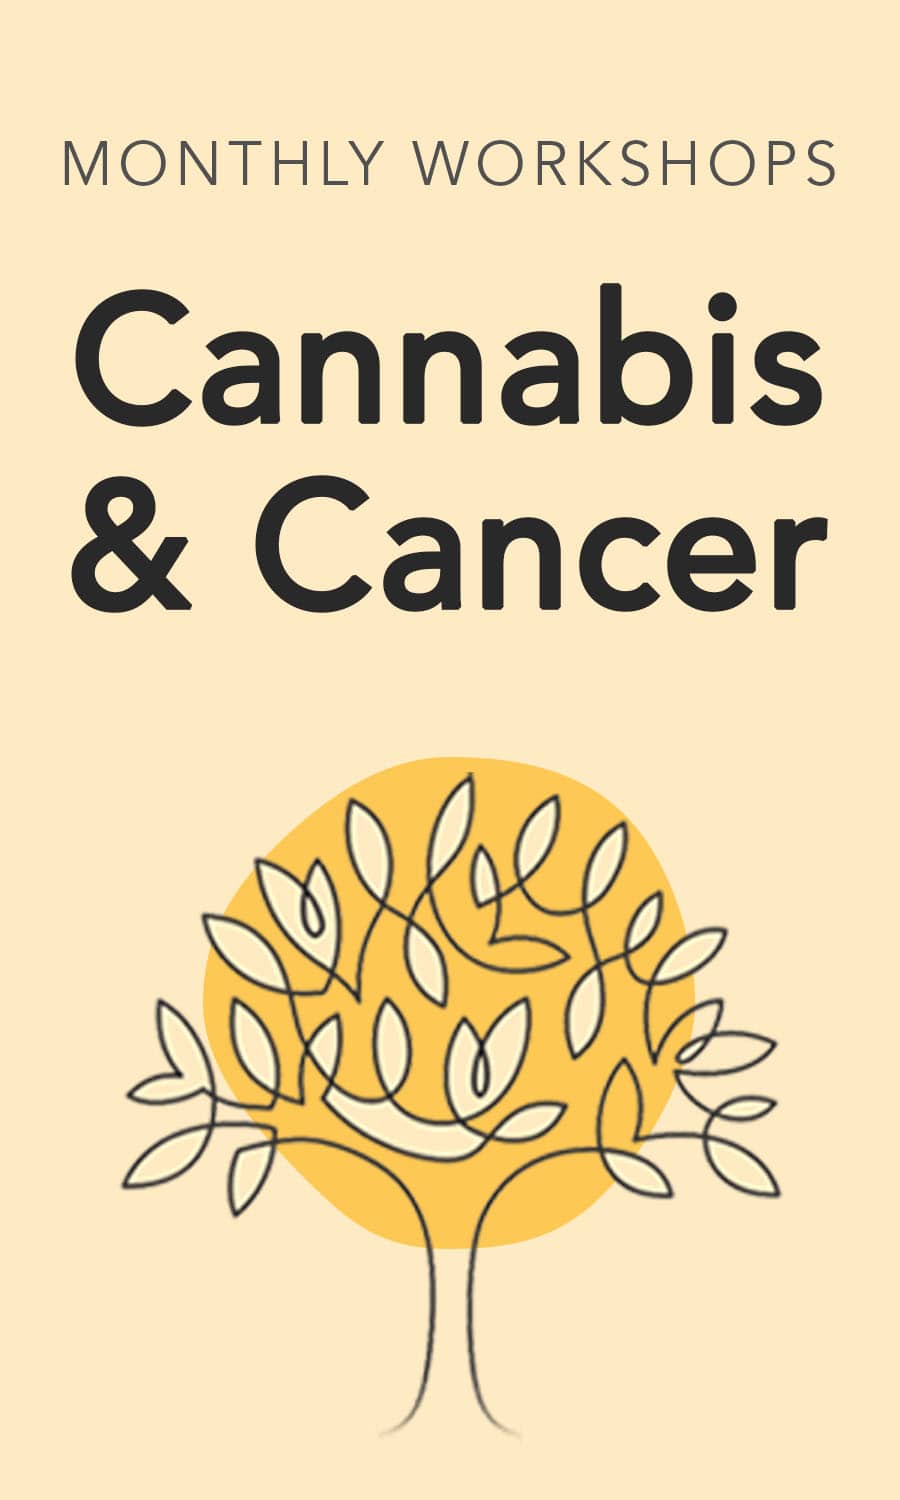 Cannabis & Cancer Workshops